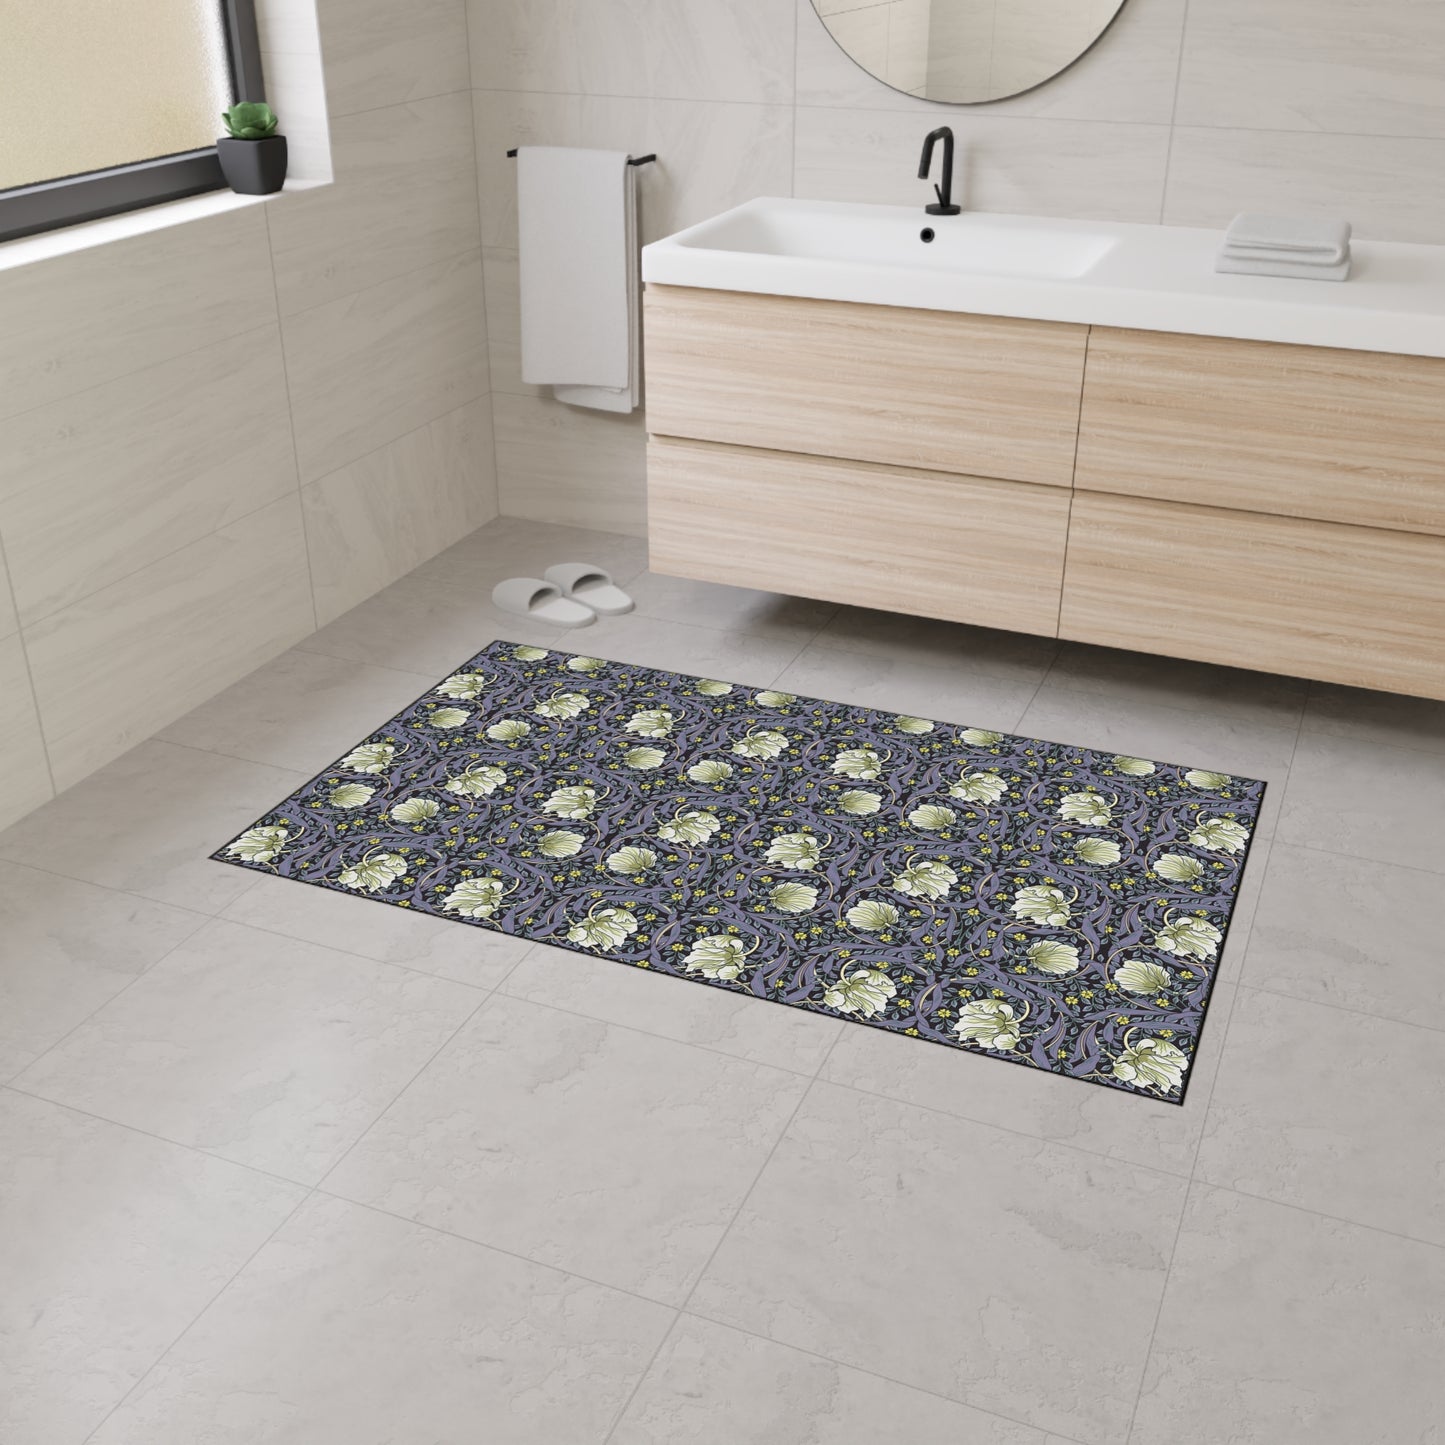 william-morris-co-heavy-duty-floor-mat-floor-mat-pimpernel-collection-lavender-16